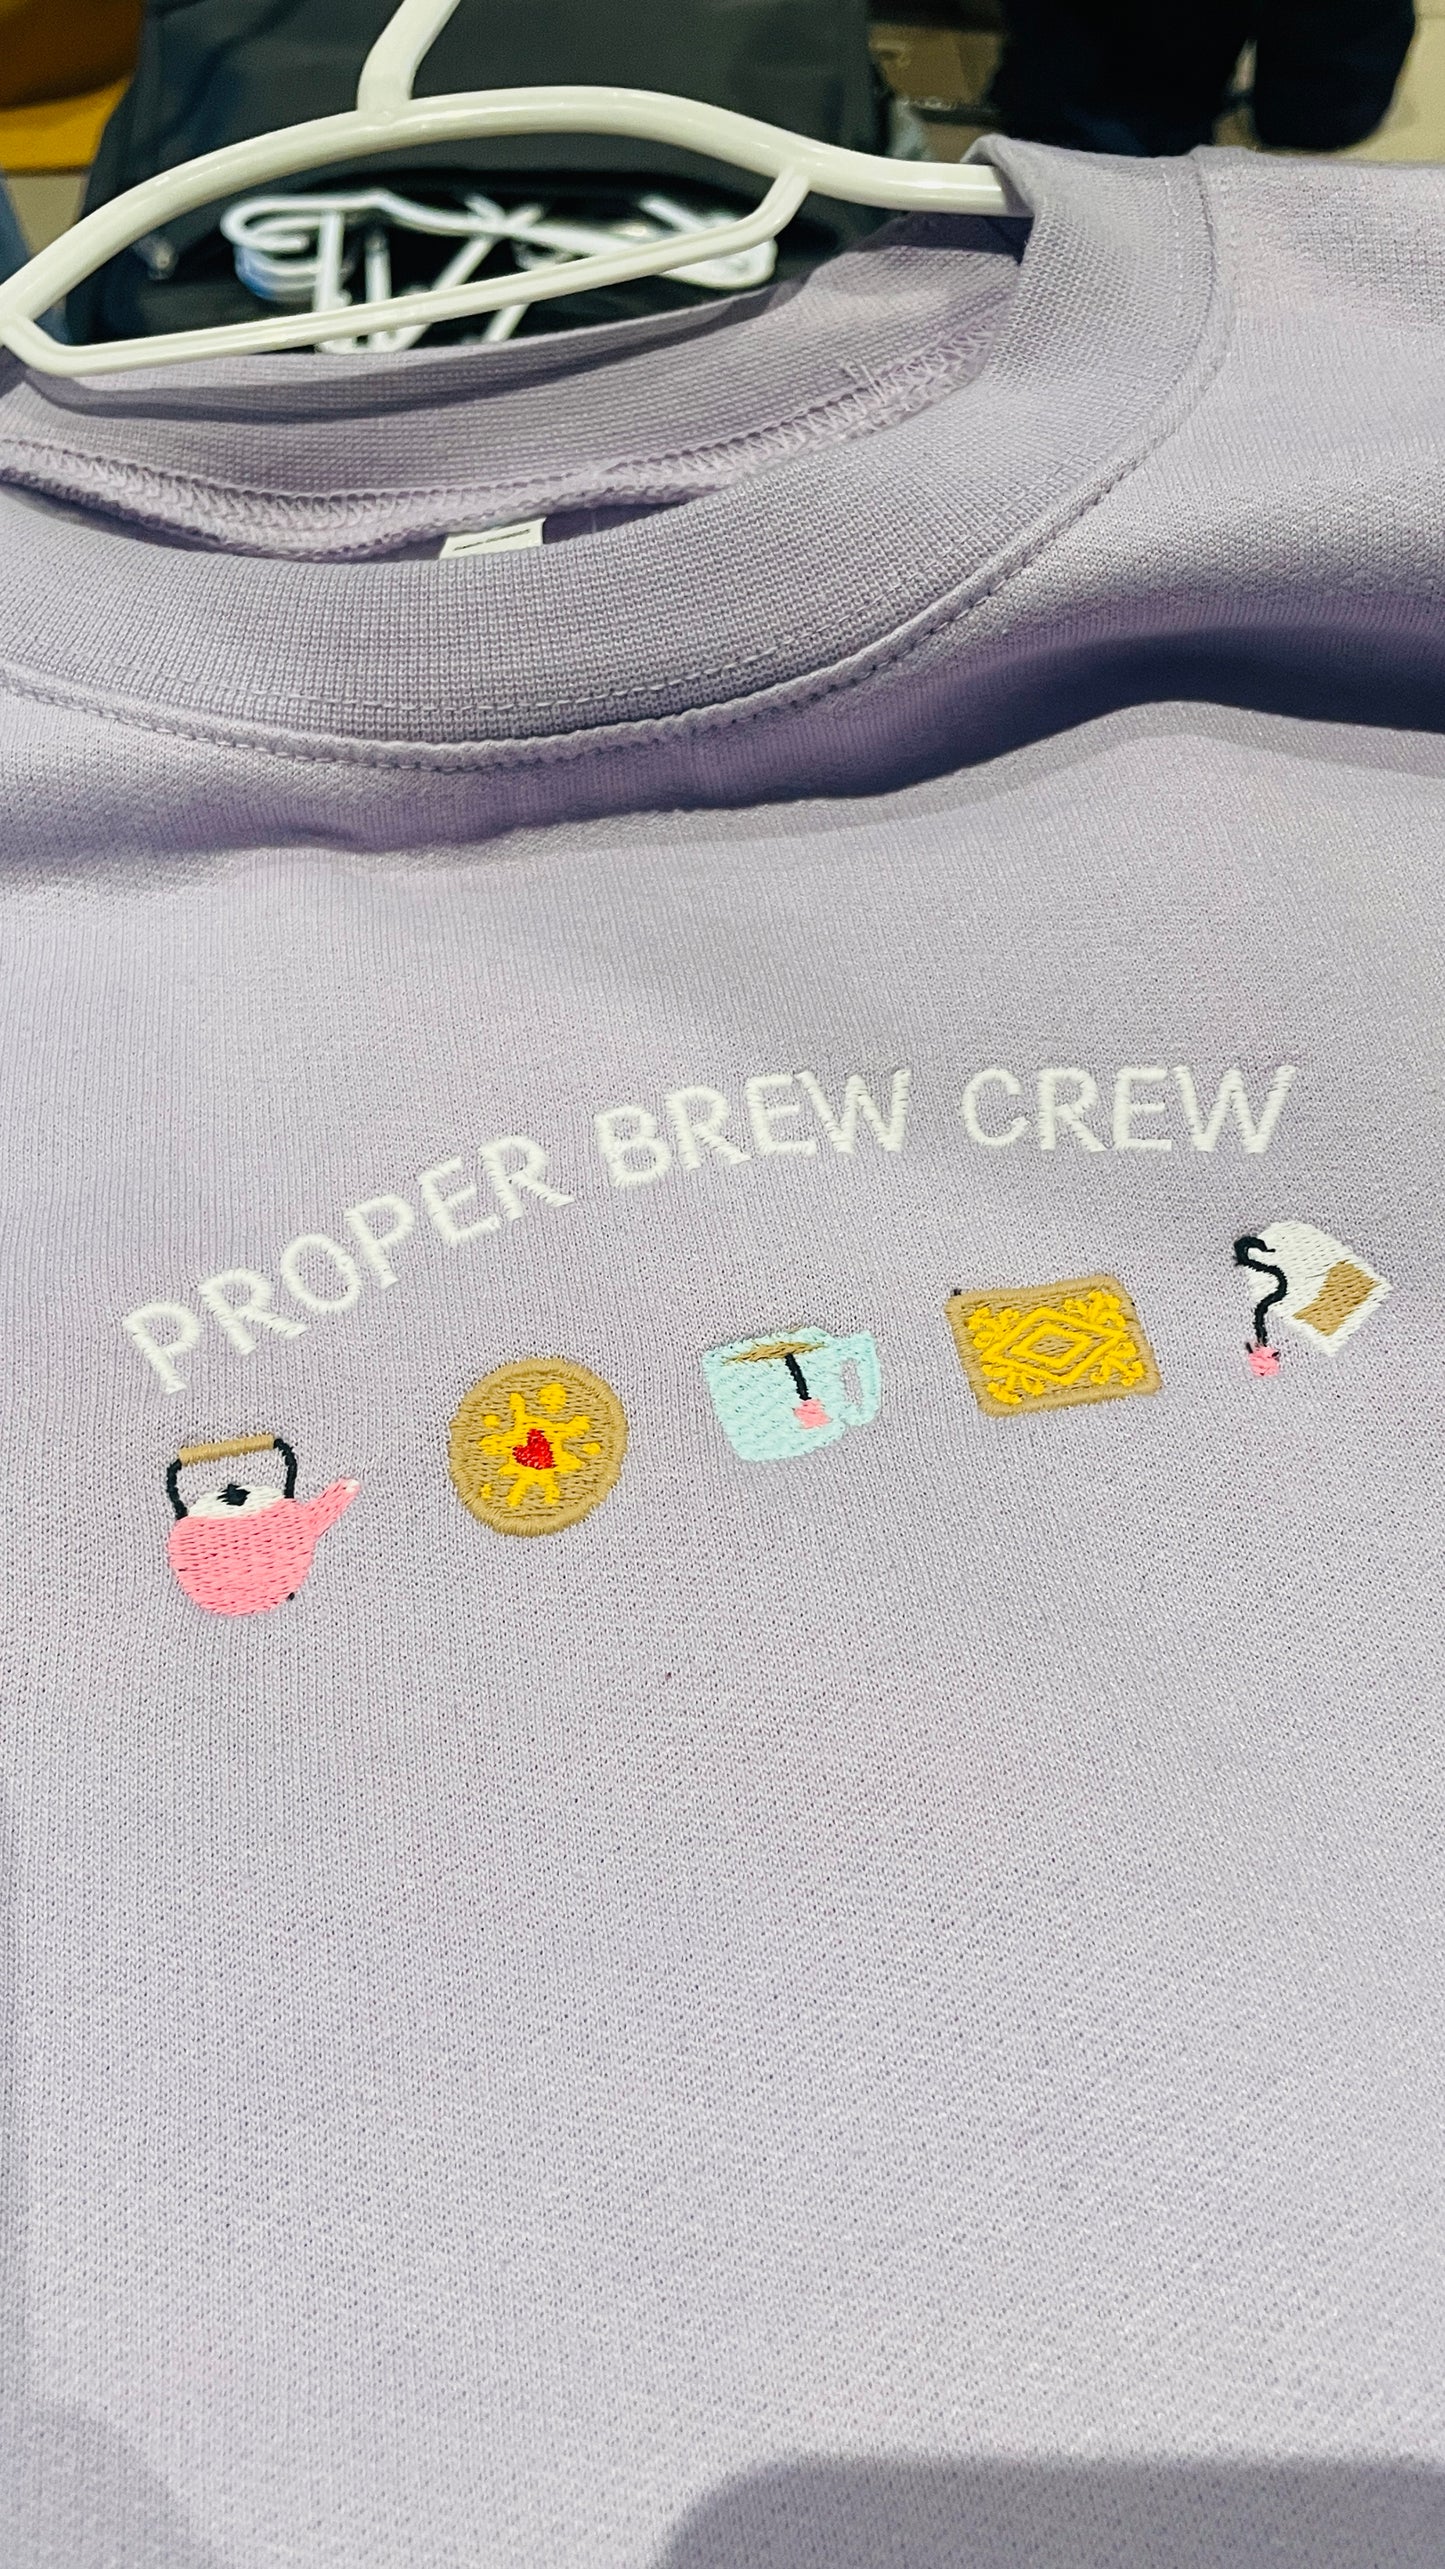 Proper Brew Crew Embroidered Crewneck Sweatshirt